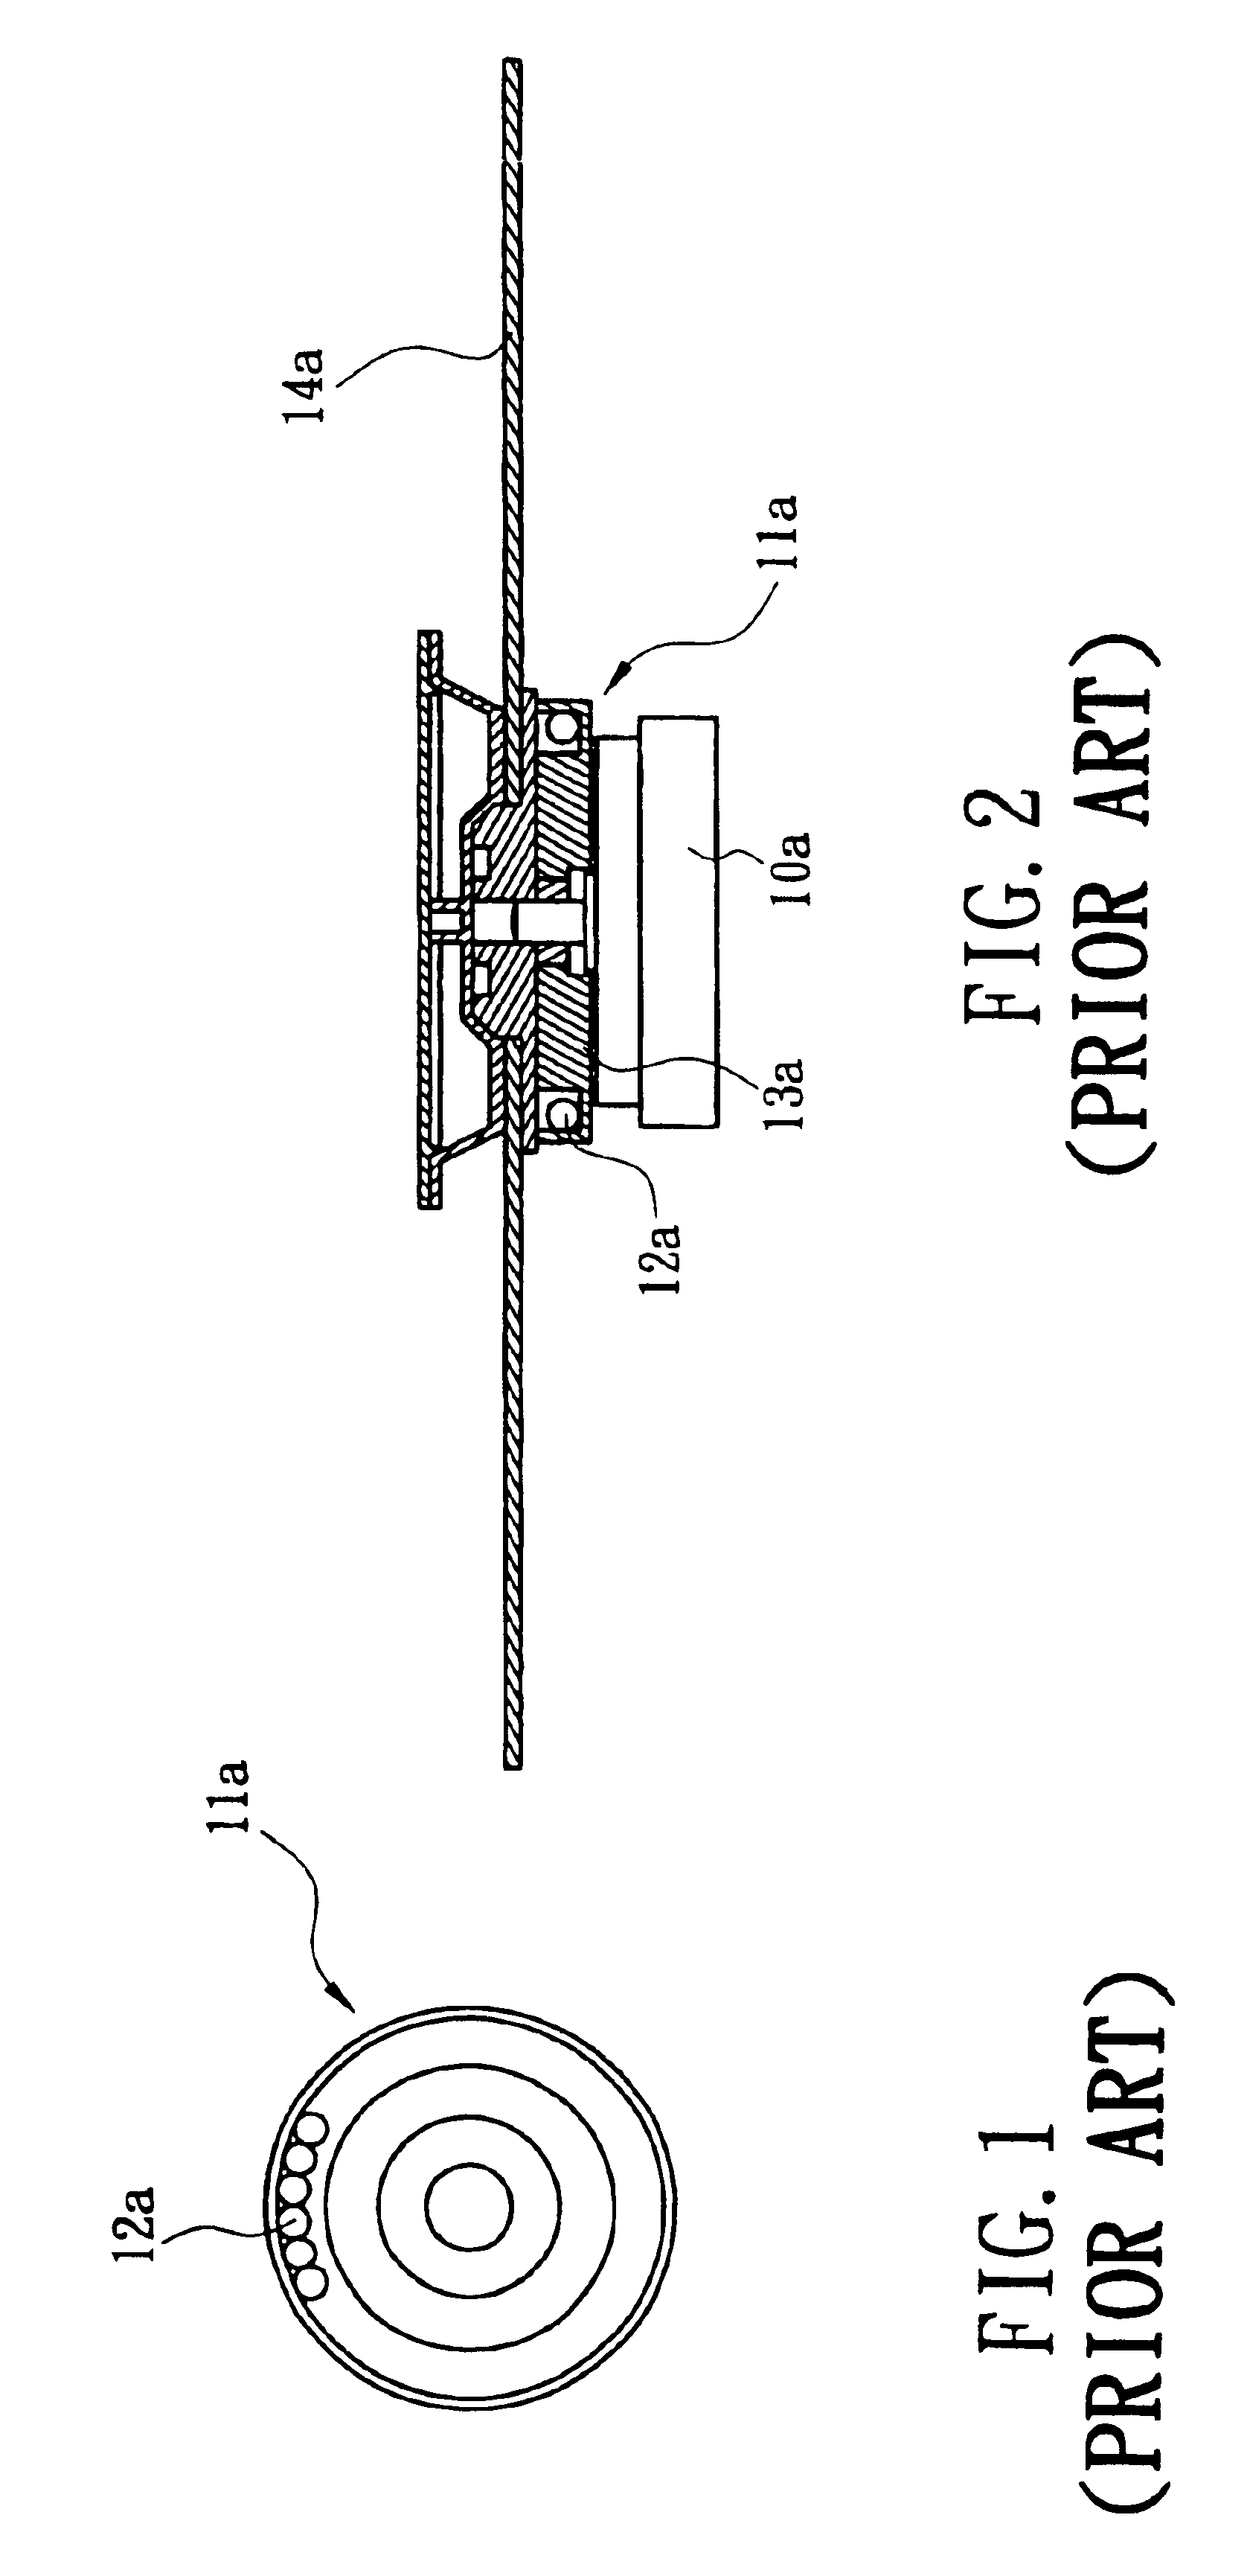 Auto-balancing apparatus having balancer clamping mechanism for optical disk drives